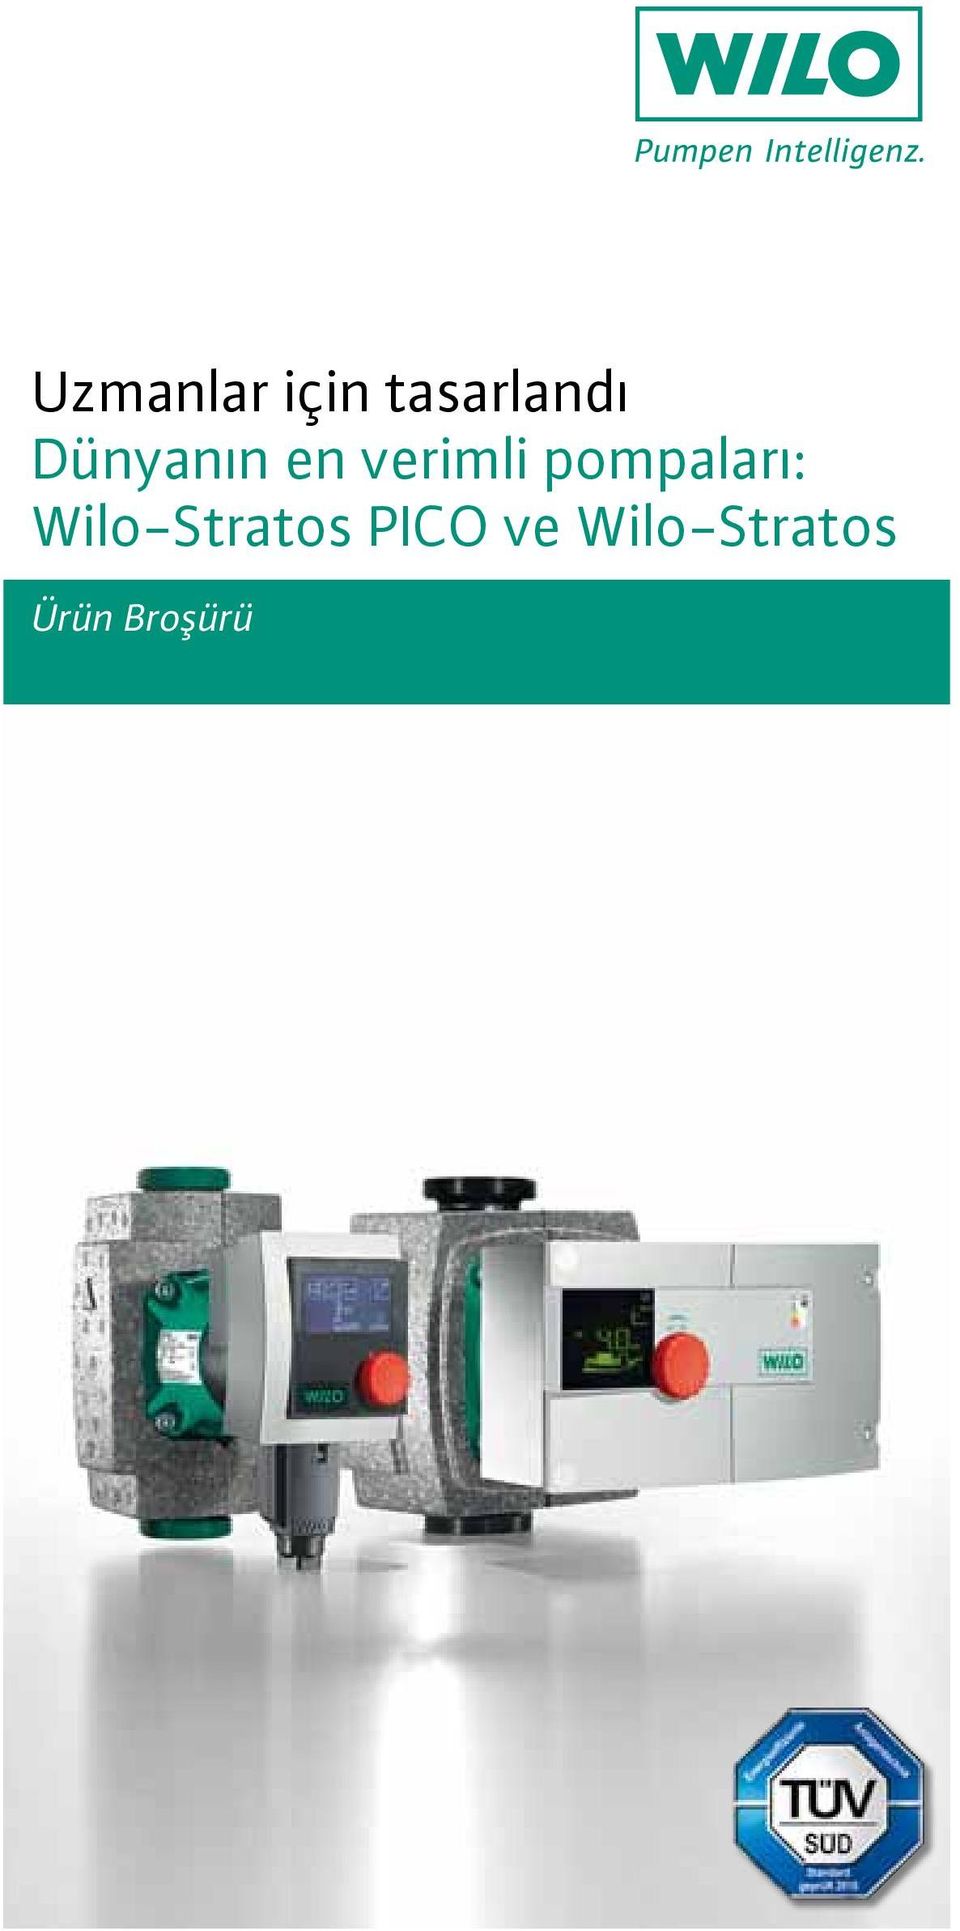 pompaları: Wilo-Stratos